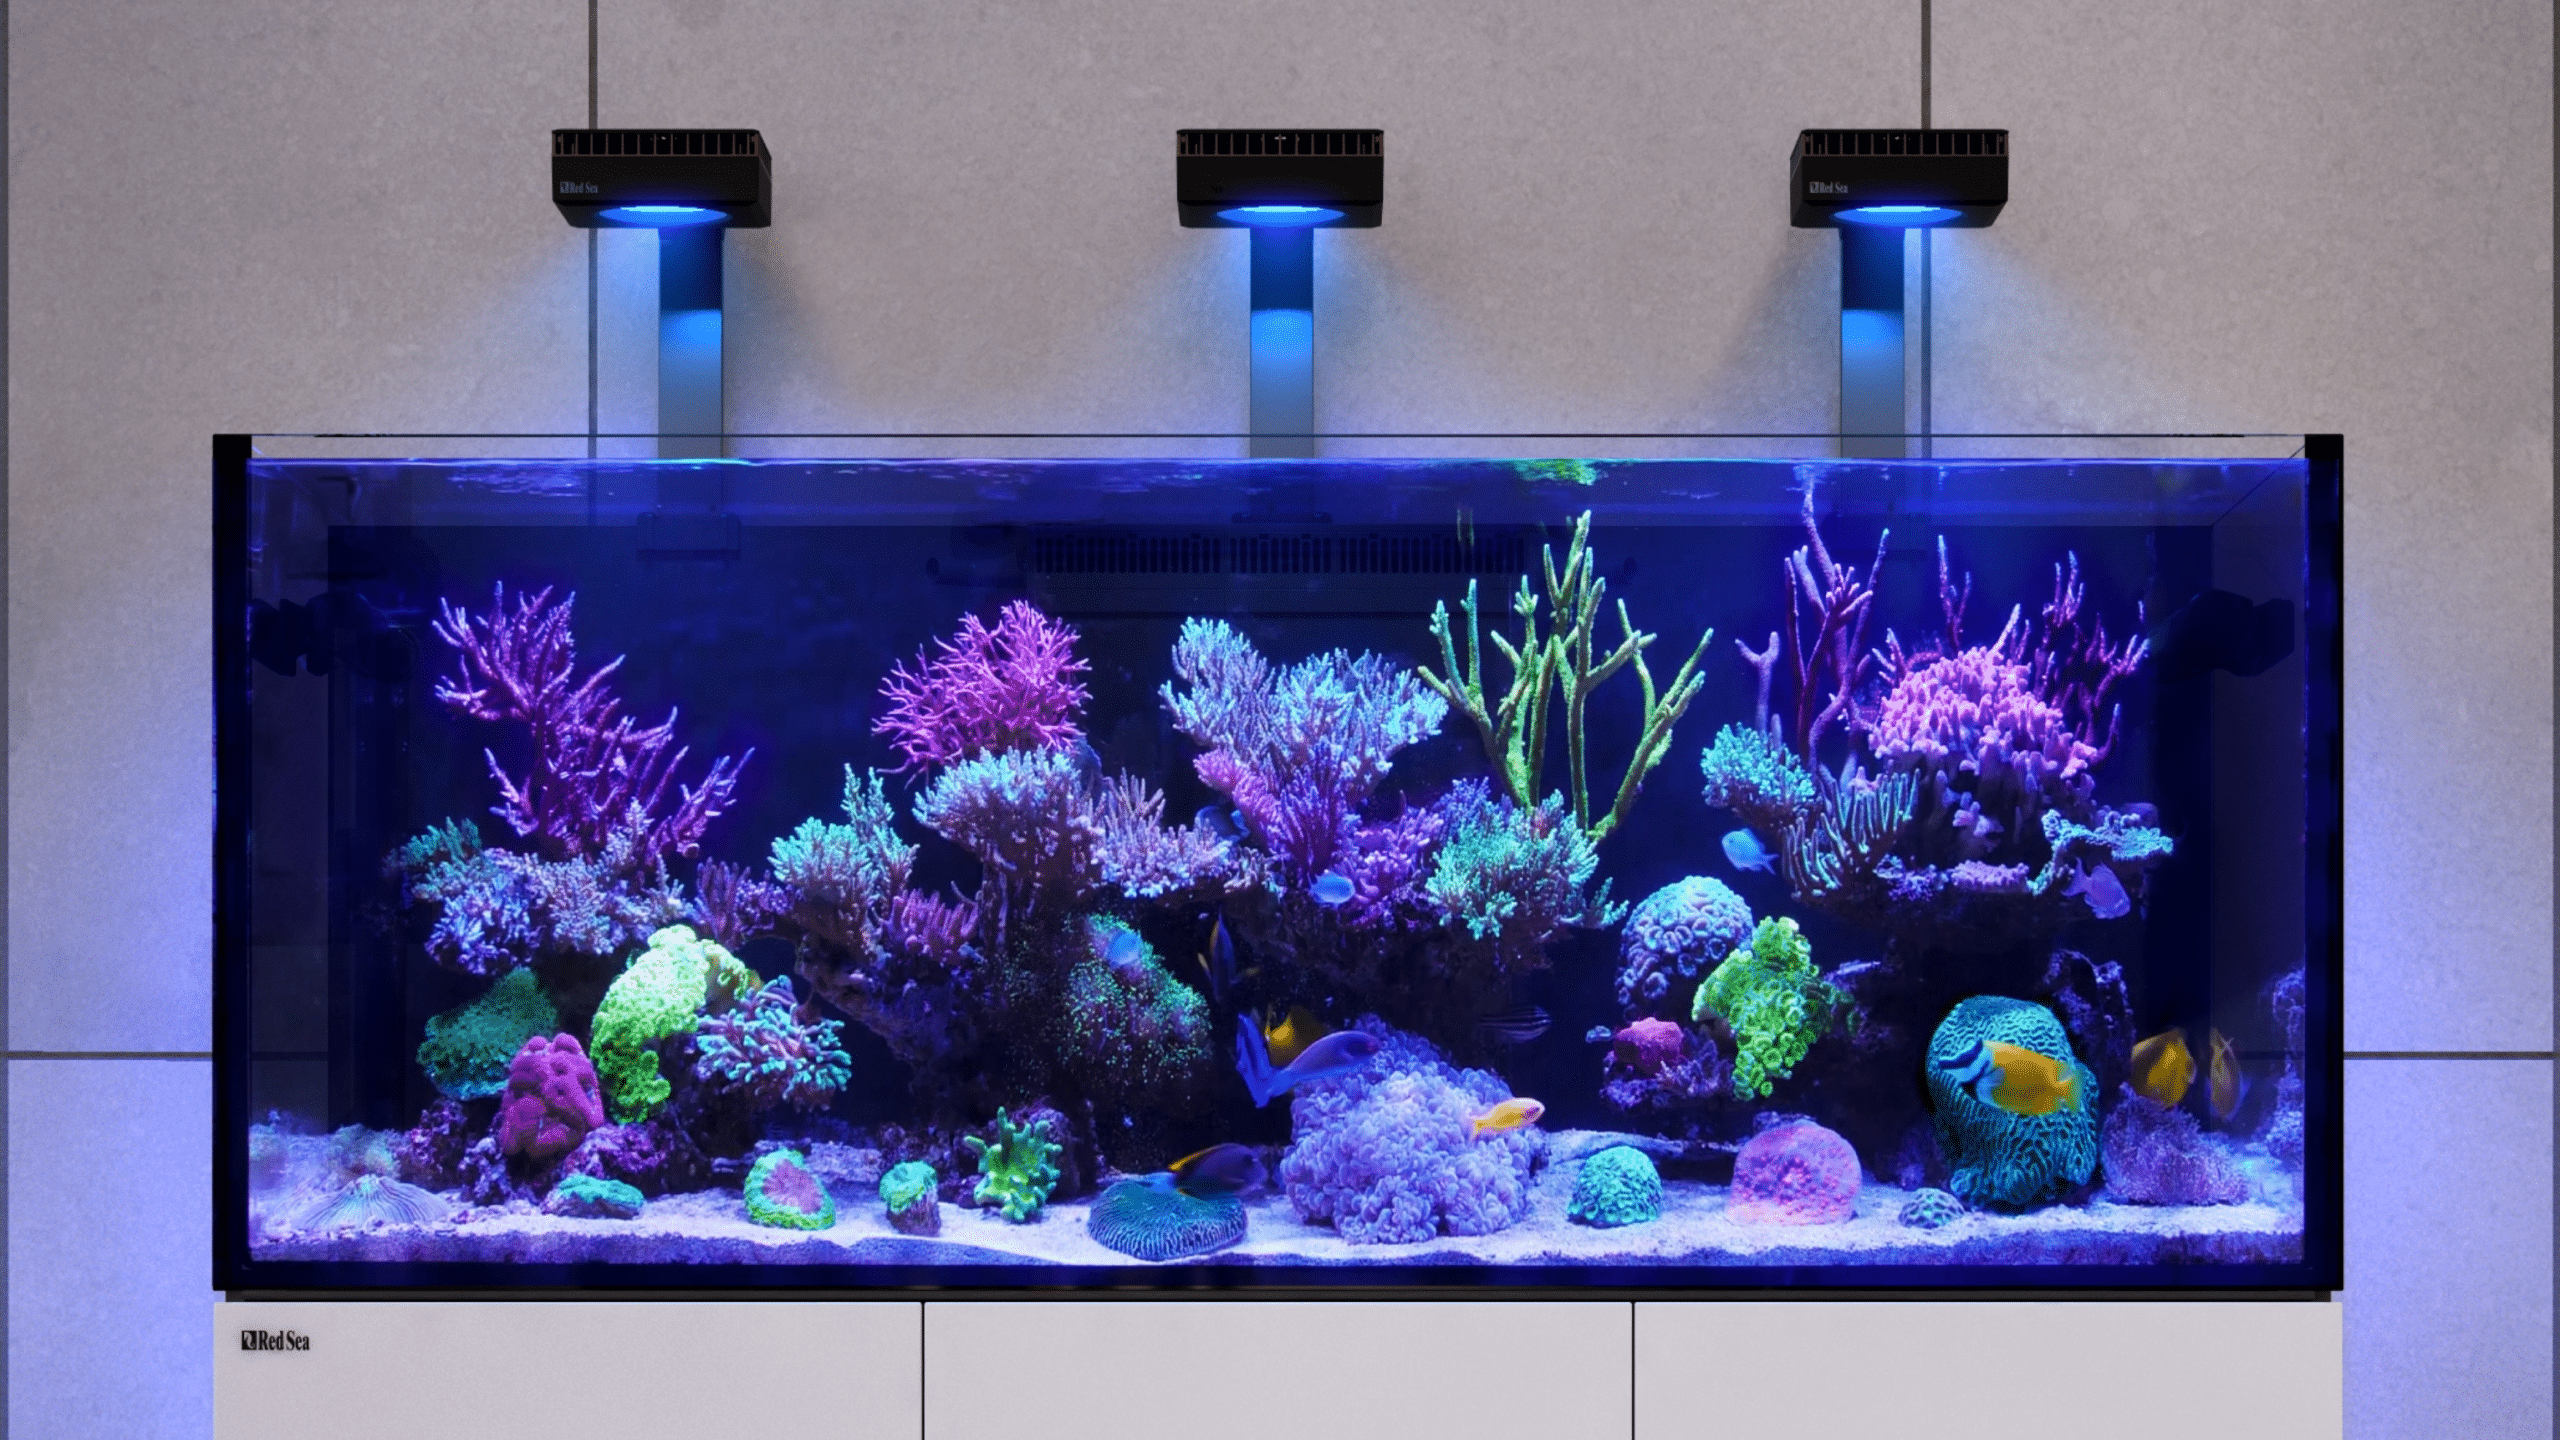 Plug & Play smart aquarium systems